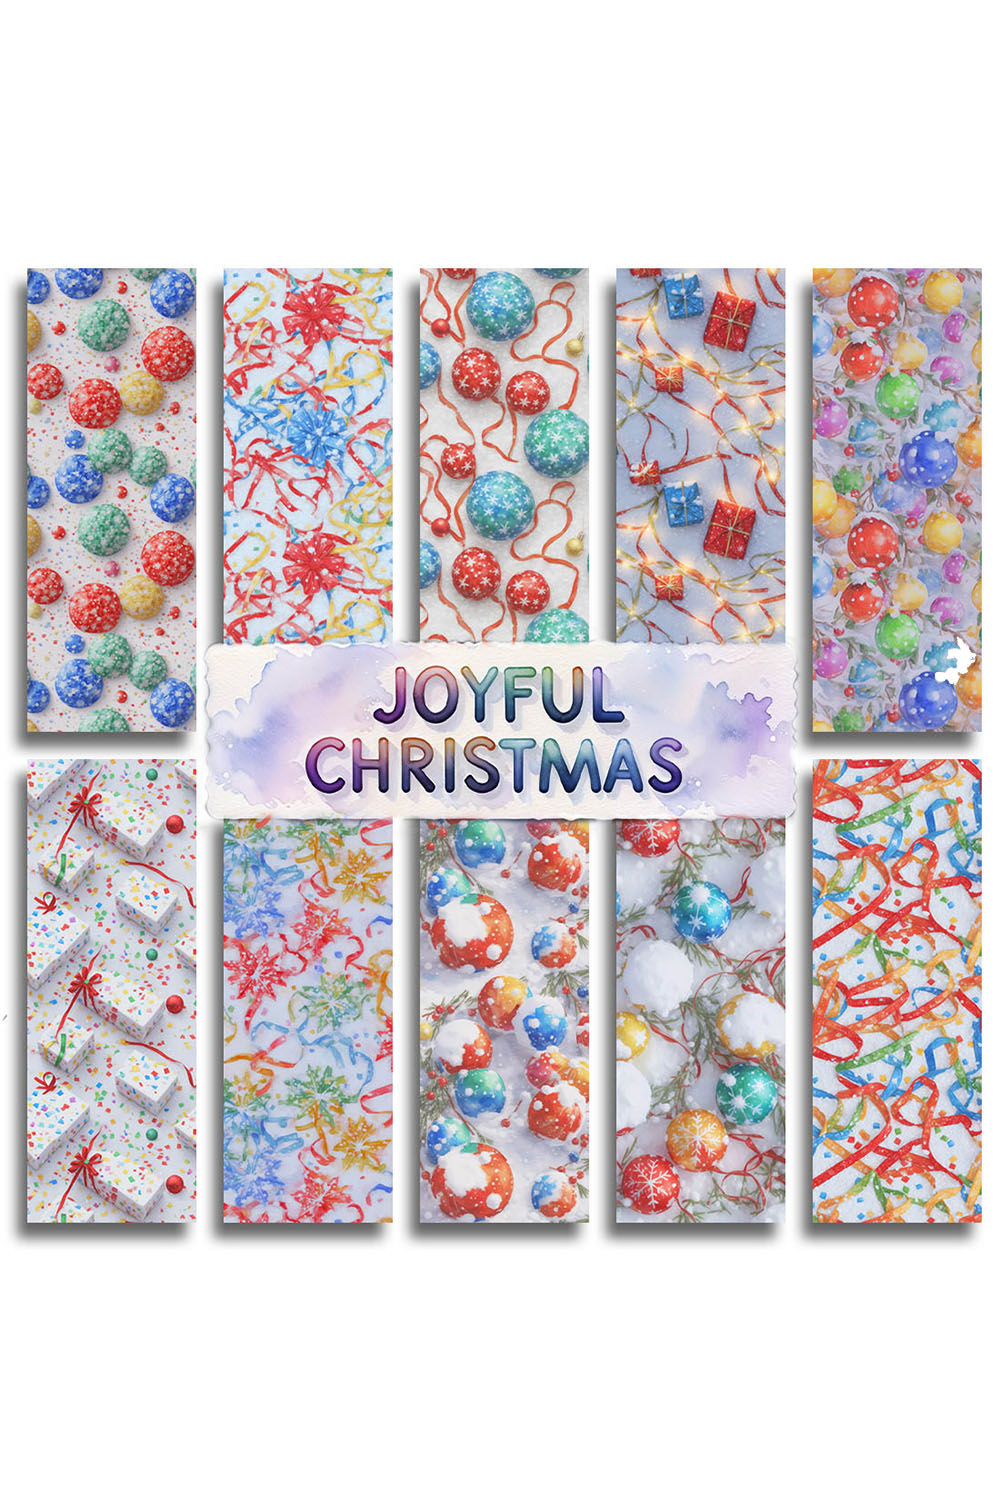 Joyful Christmas: Seamless Patterns pinterest preview image.